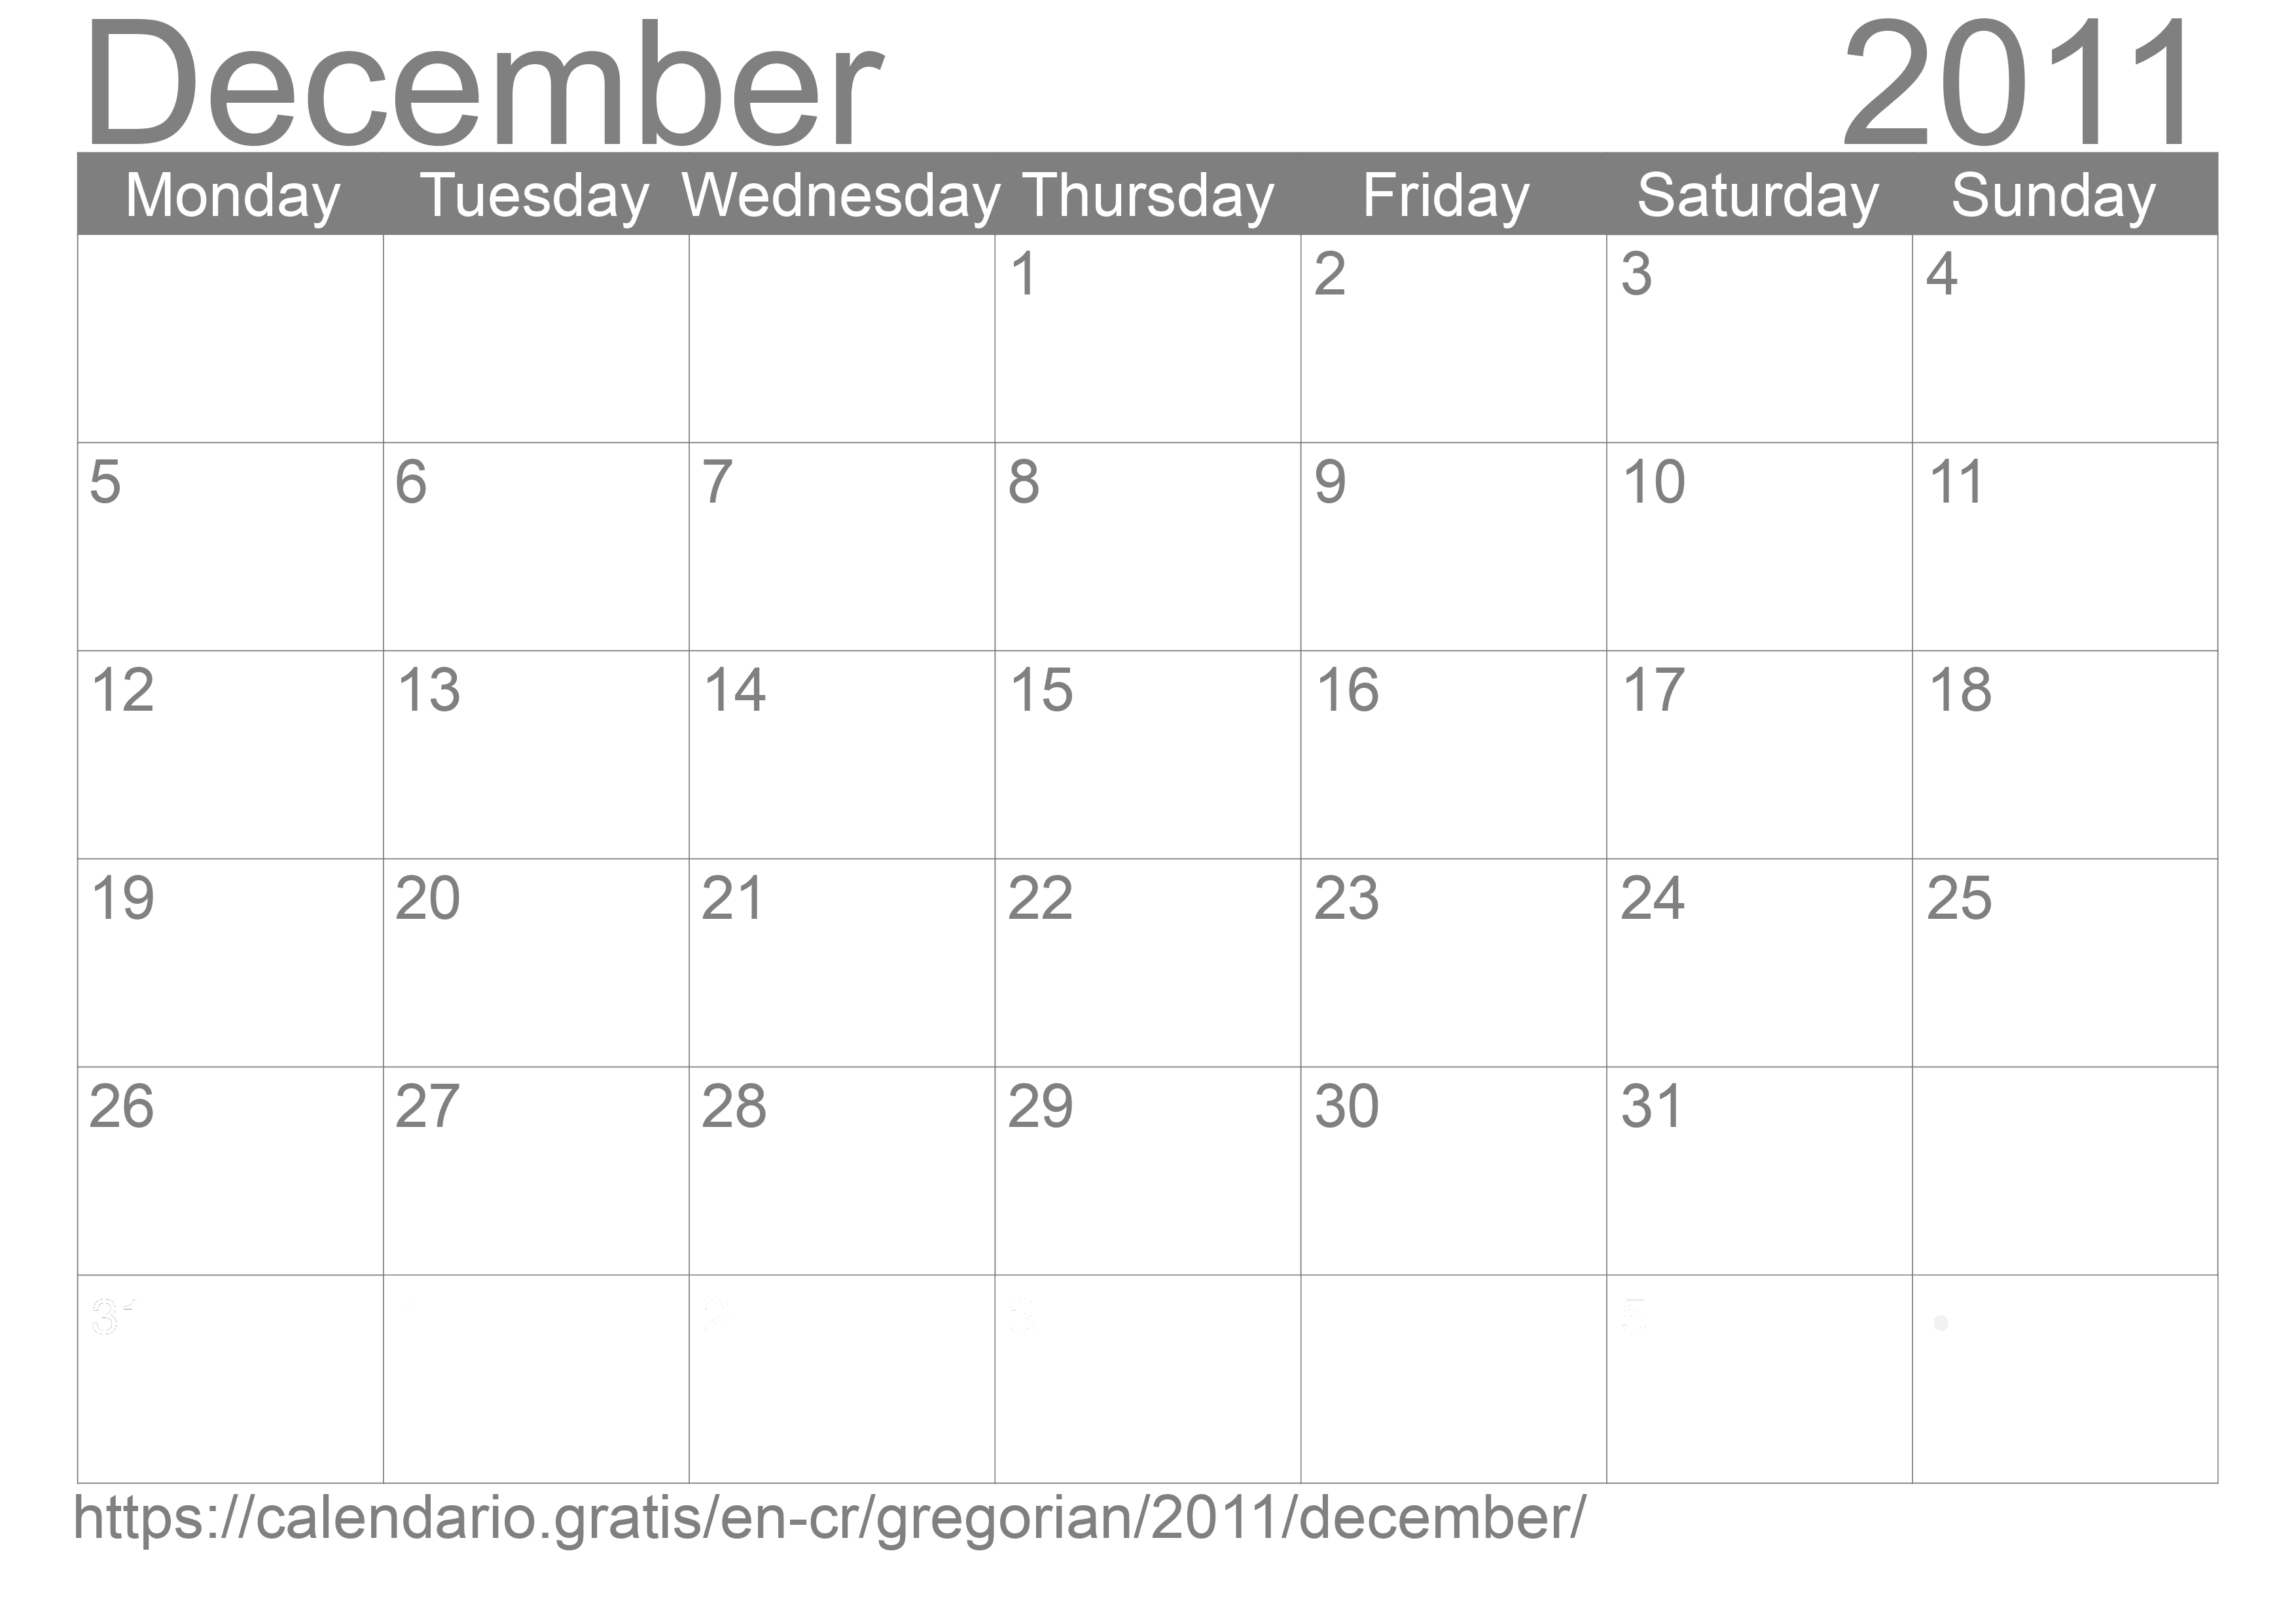 Calendar December 2011 to print